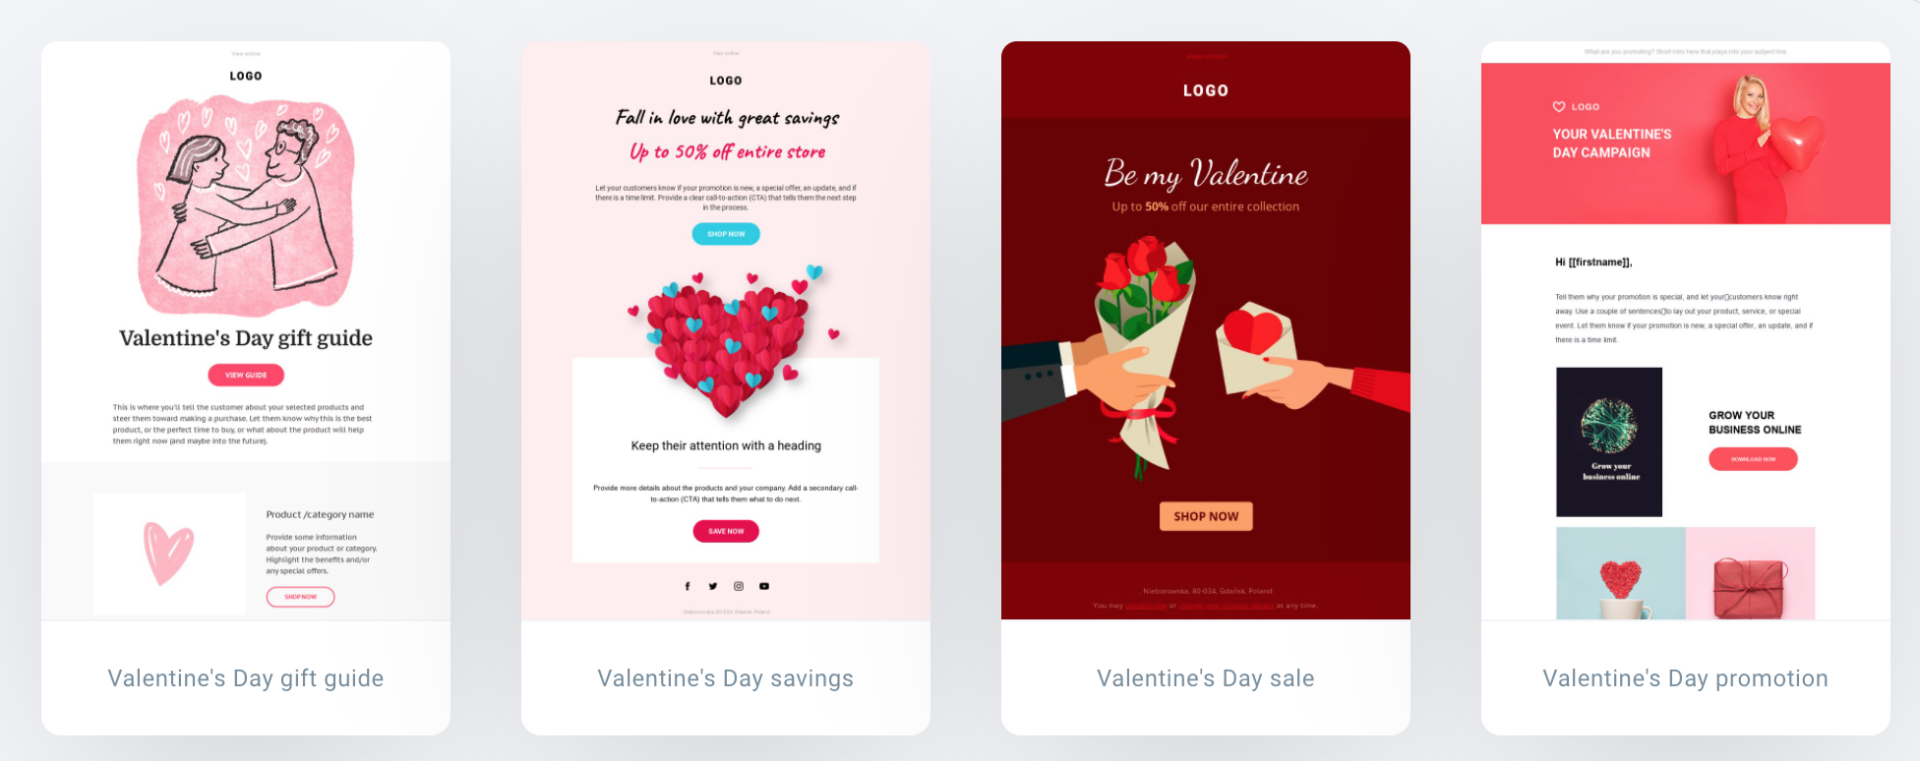 valentine's day email marketing